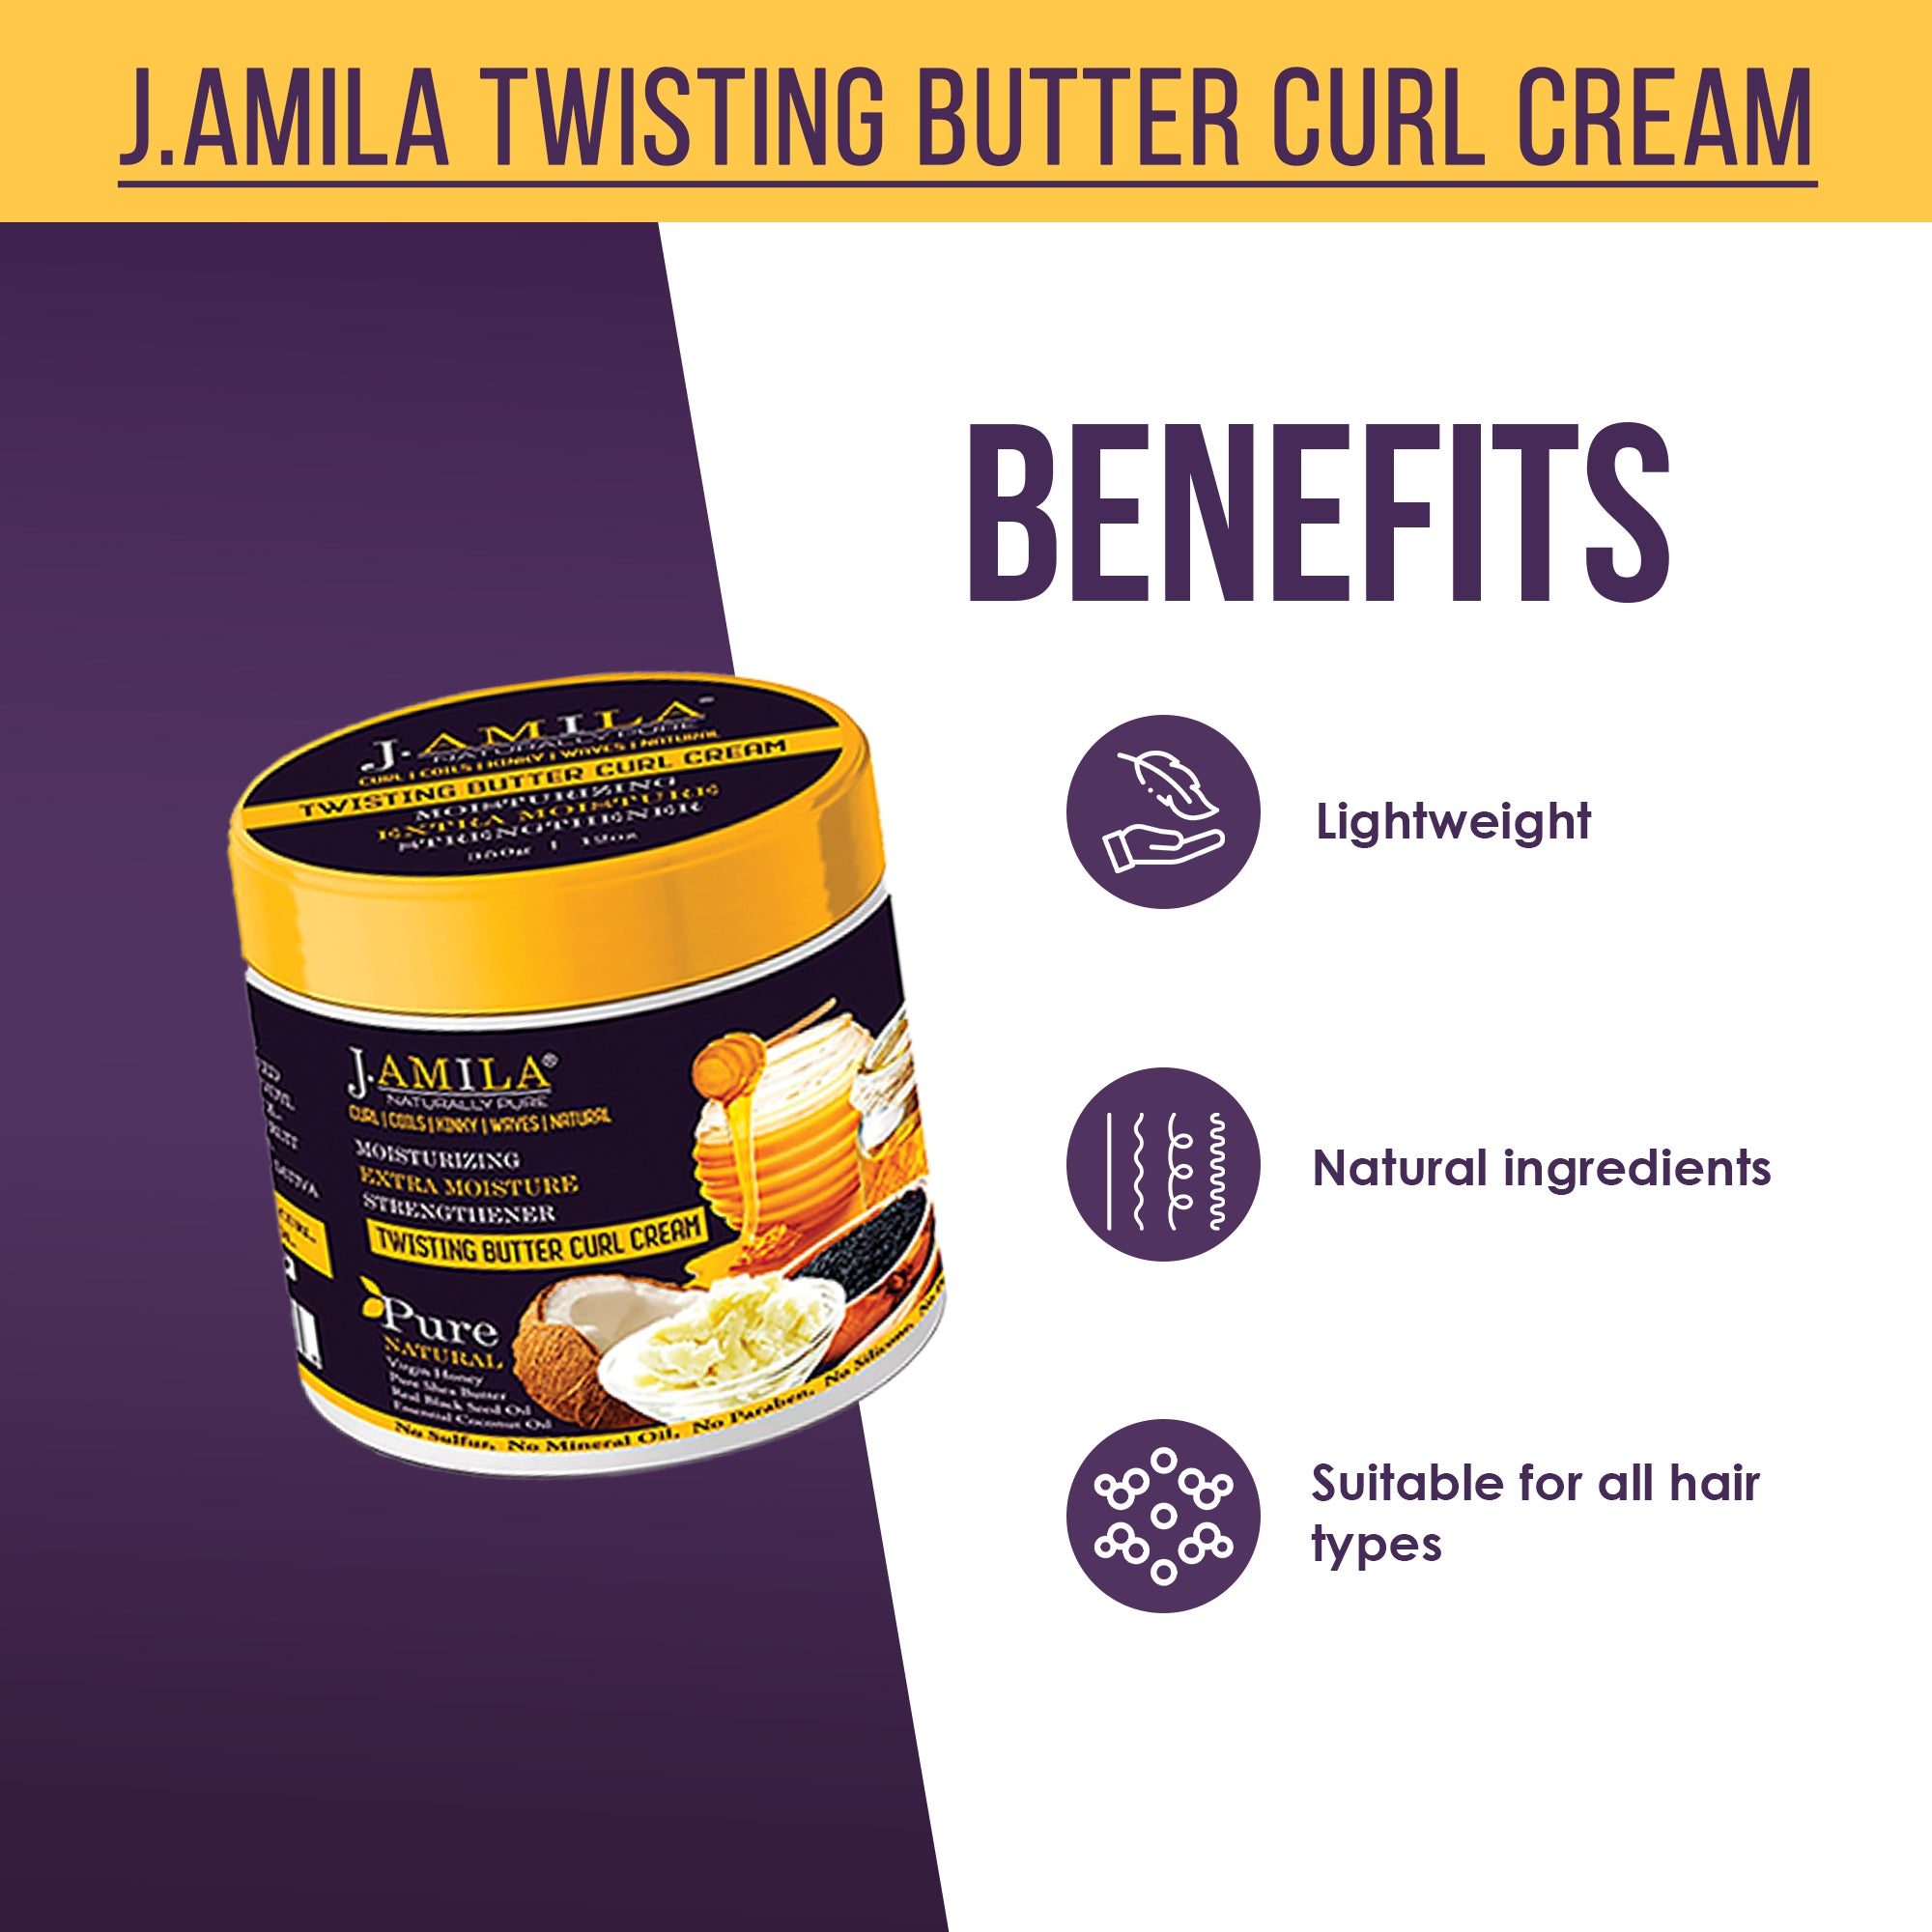 J. AMILA Naturally Pure Twisting Butter Curl Cream